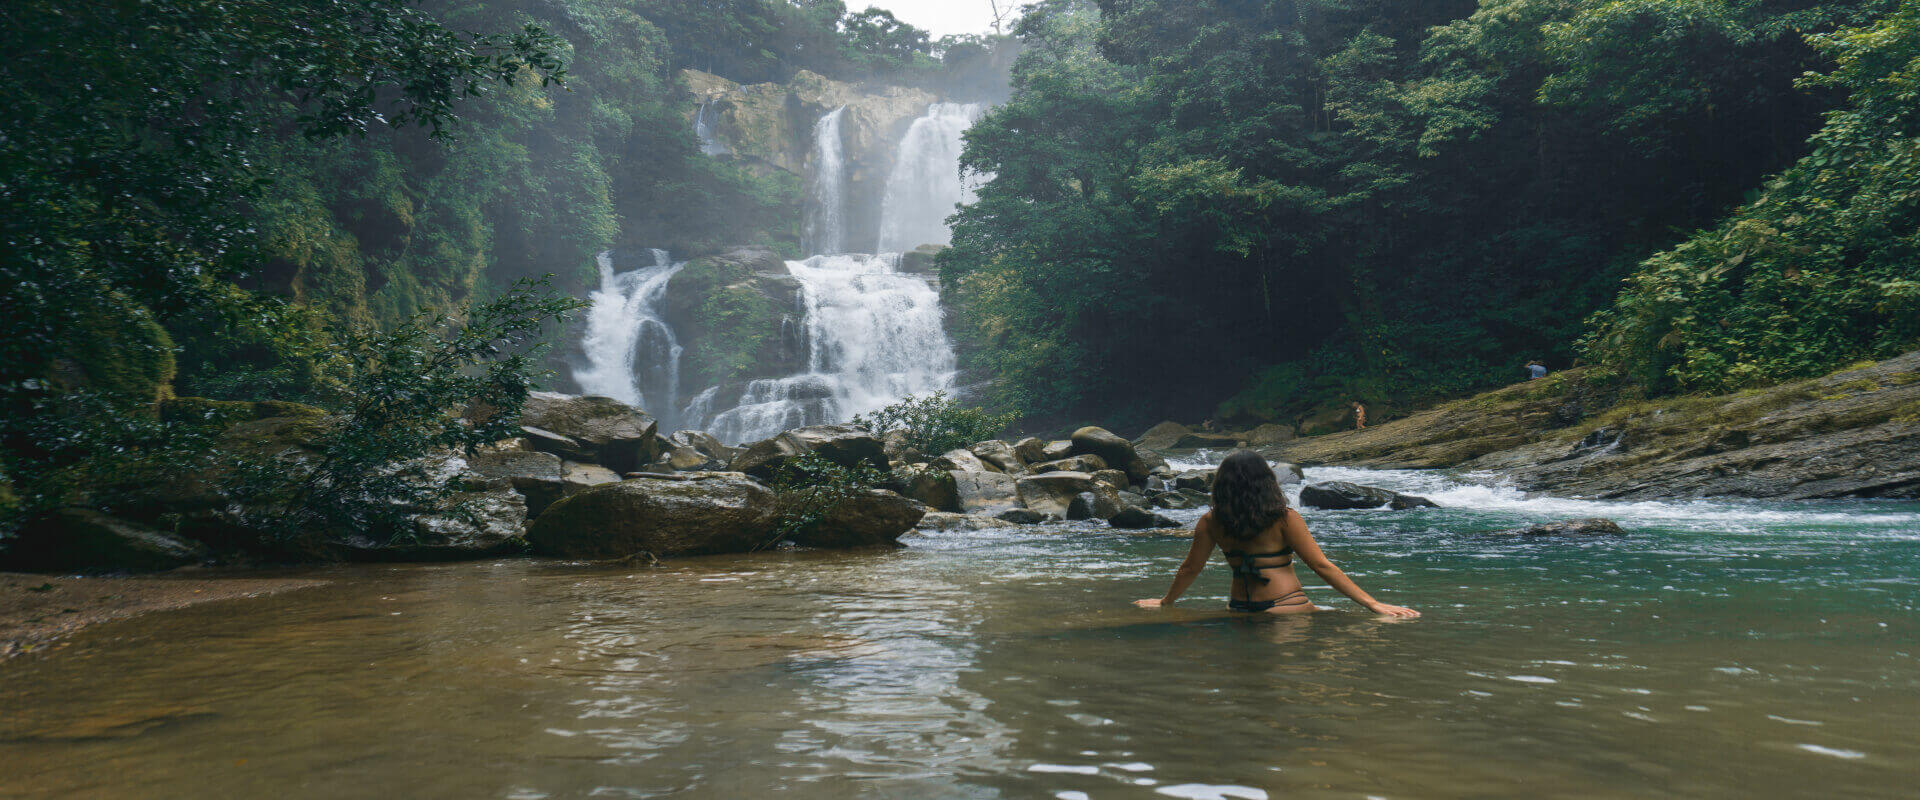 Nauyaca Waterfalls tour in Manuel Antonio | Costa Rica Jade Tours